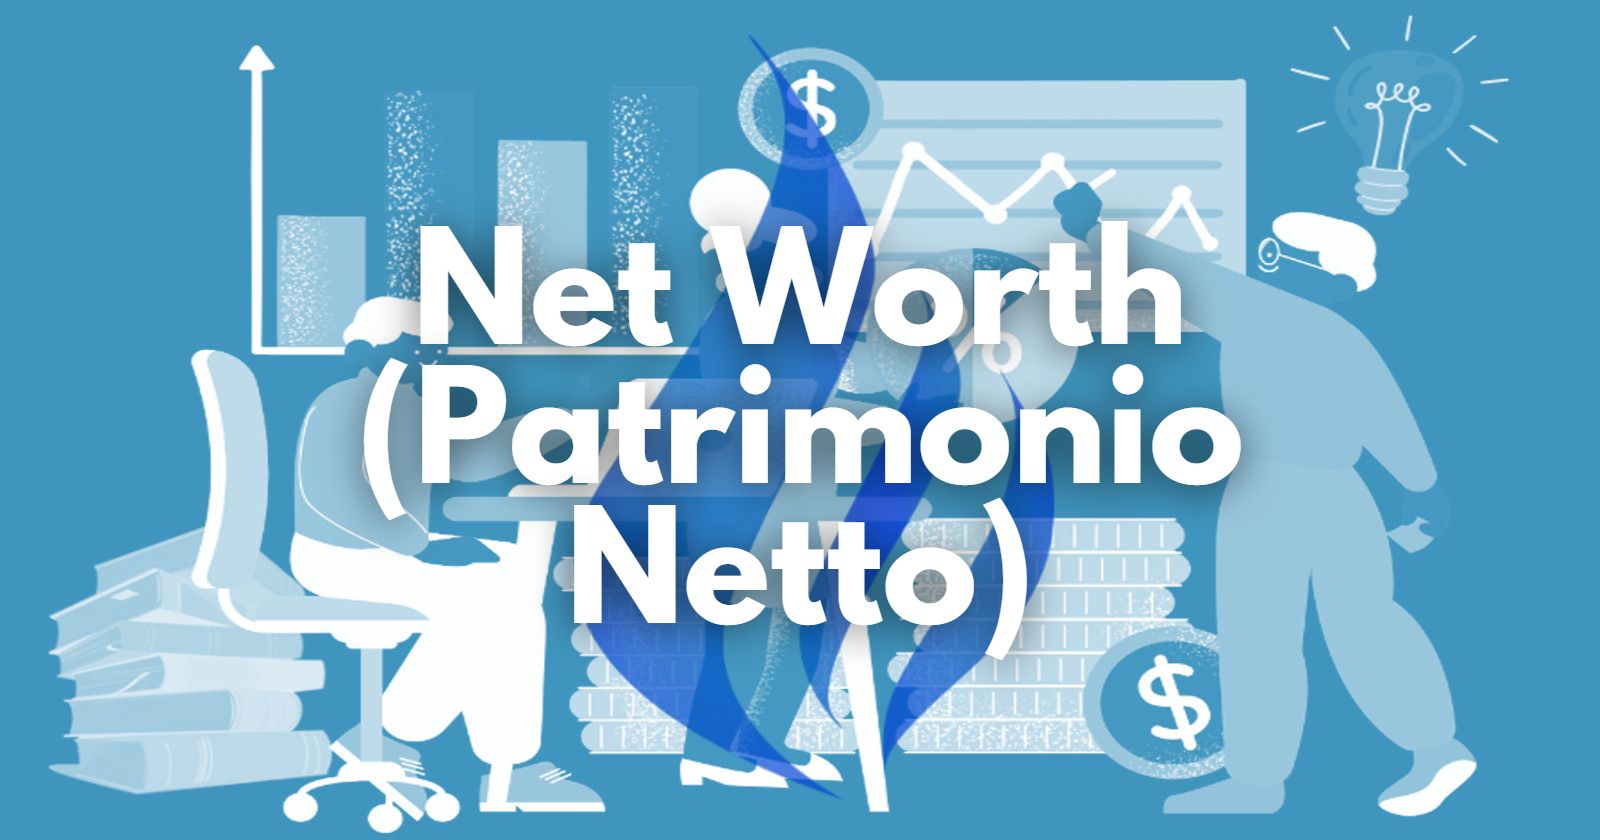 Net Worth (Patrimonio Netto)